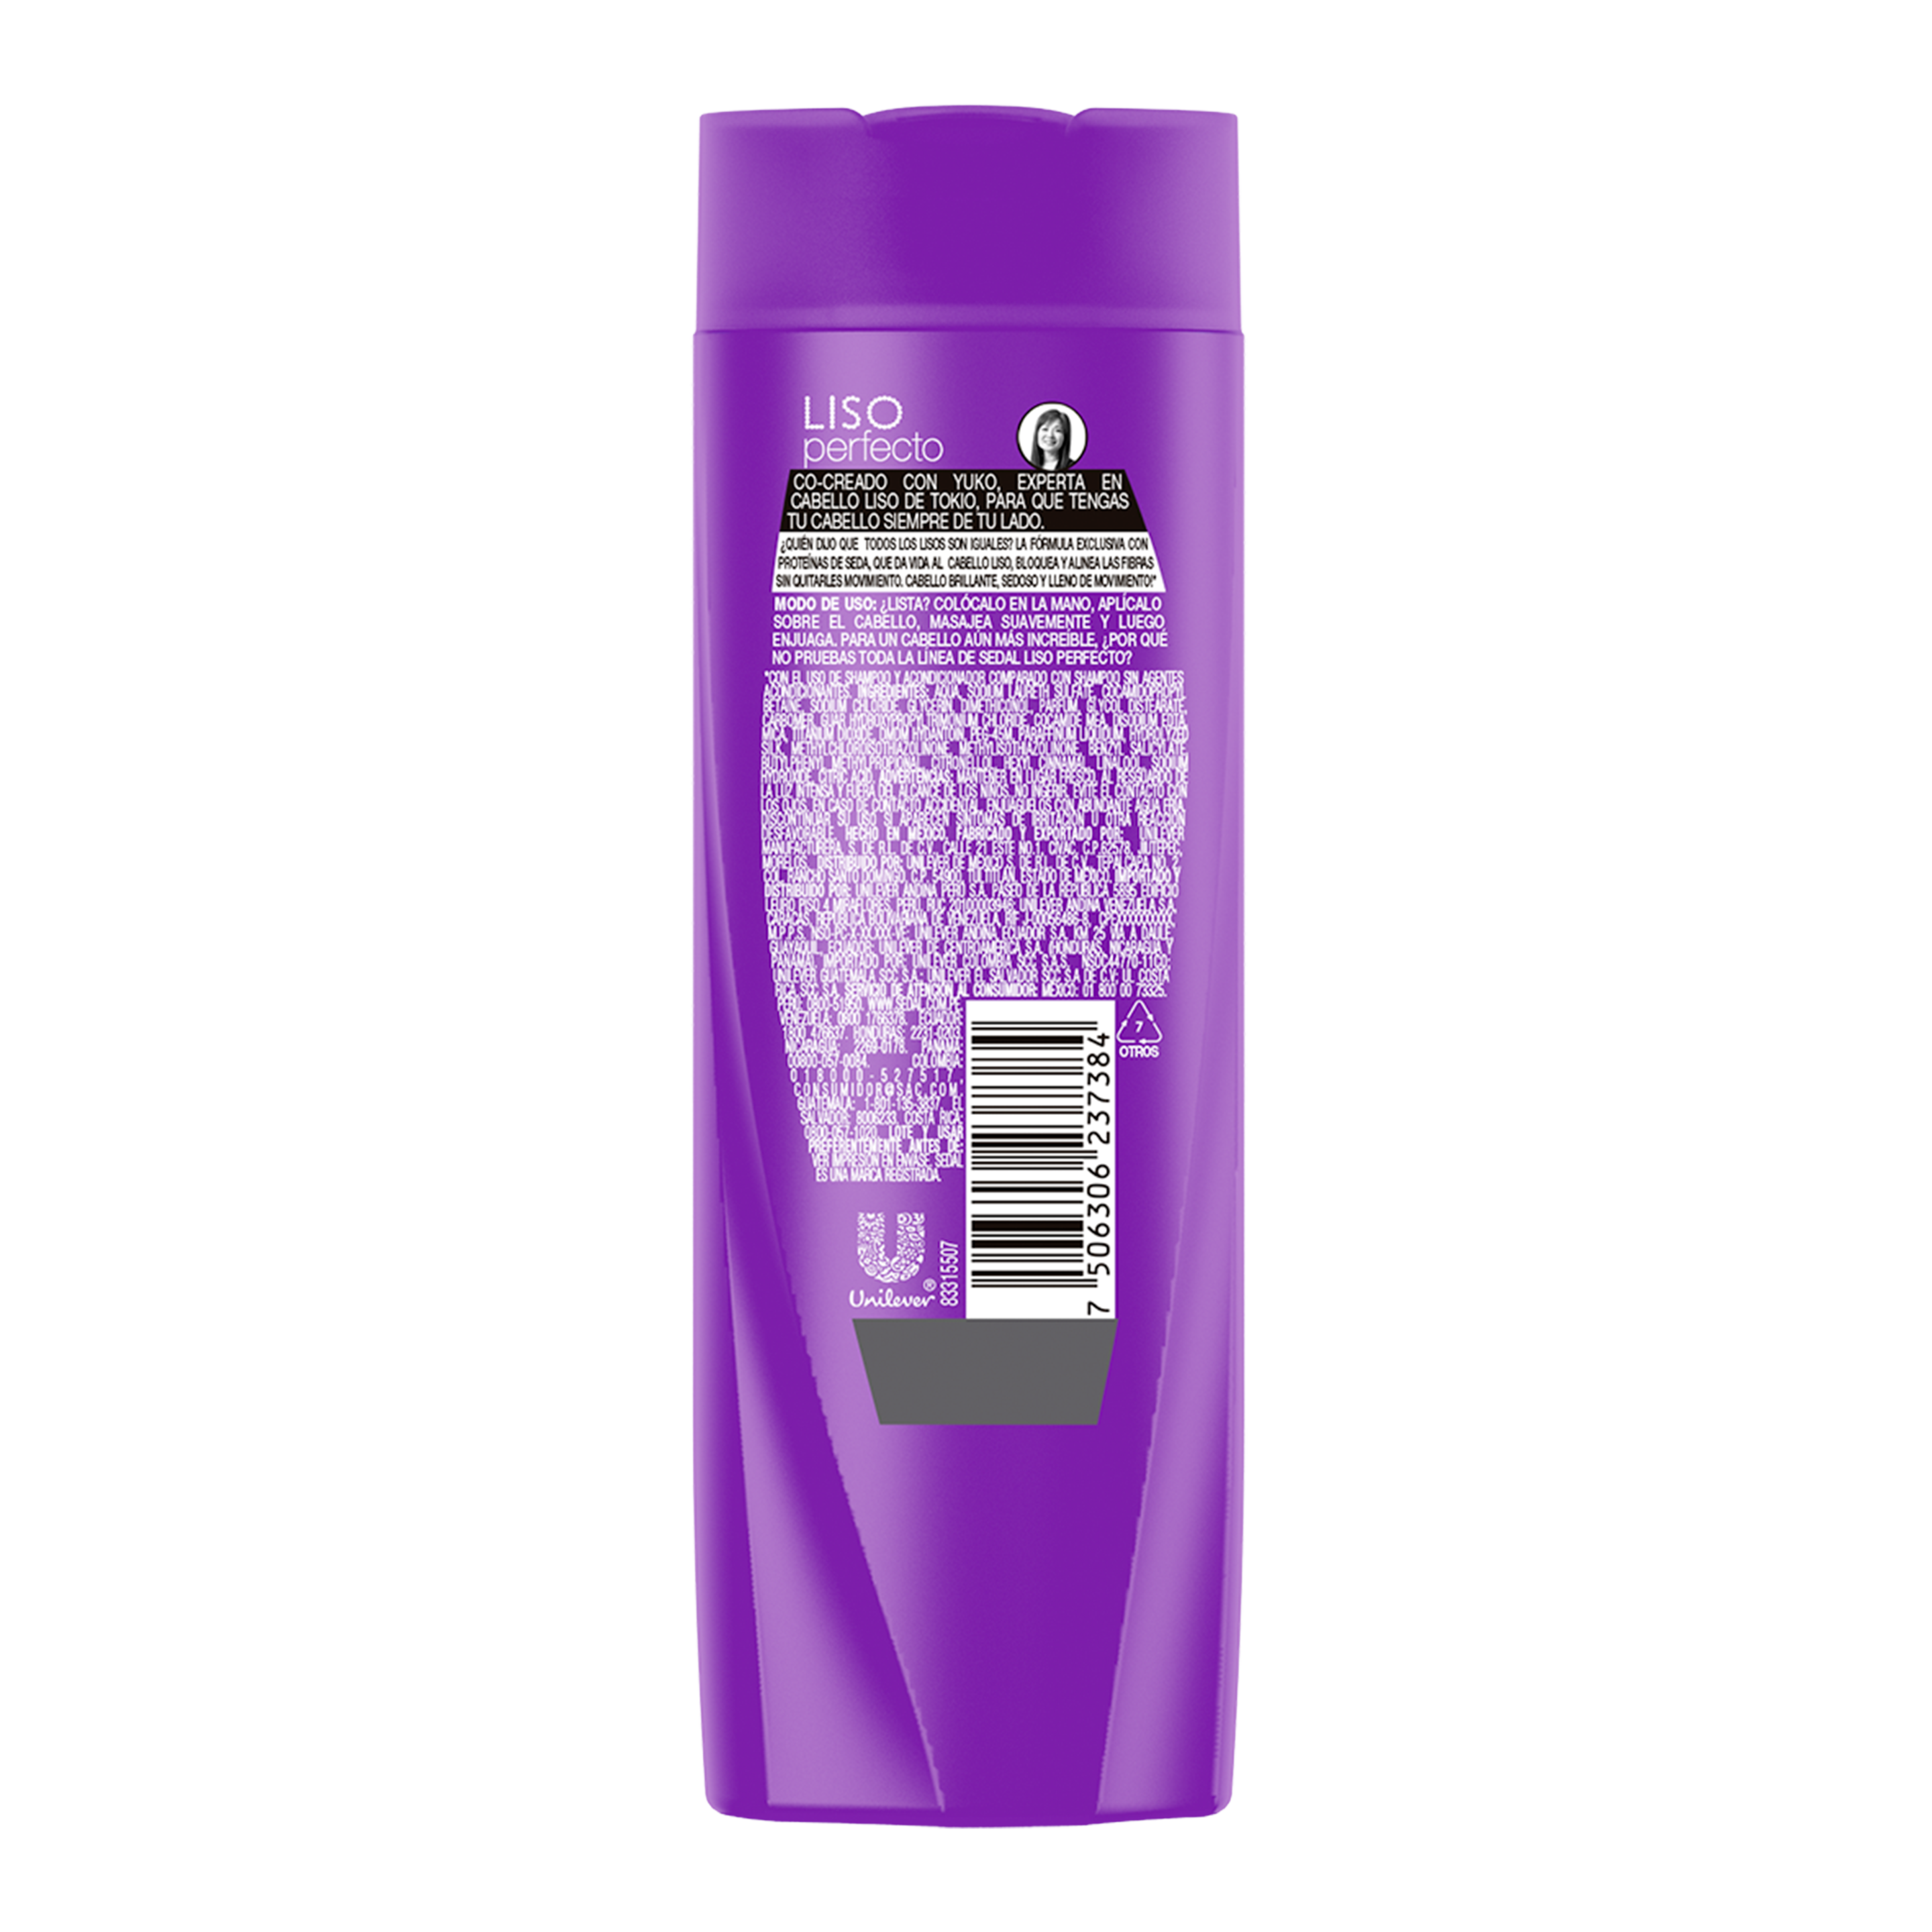 Imagen al parte posterior del paquete Sedal Shampoo Liso Perfecto 190ml